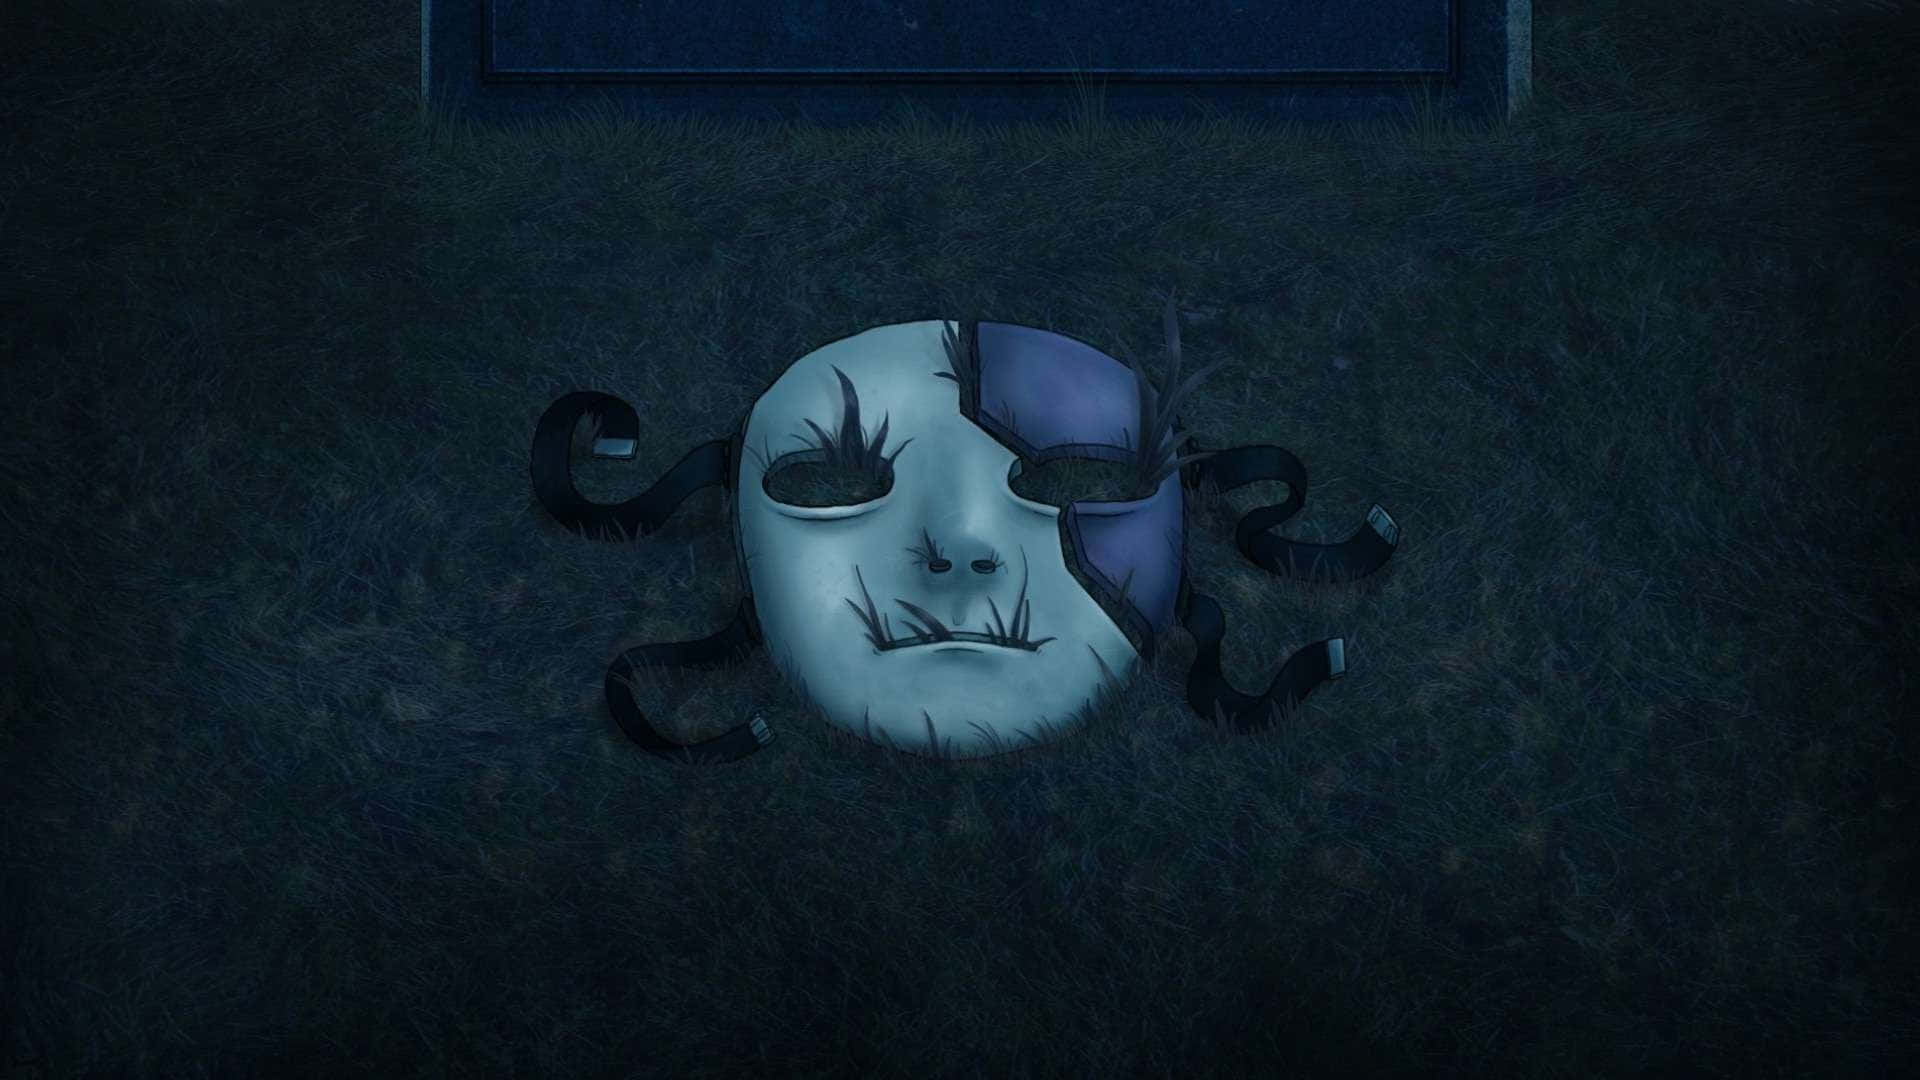 Mysterious Sally Face in a Blue Haze